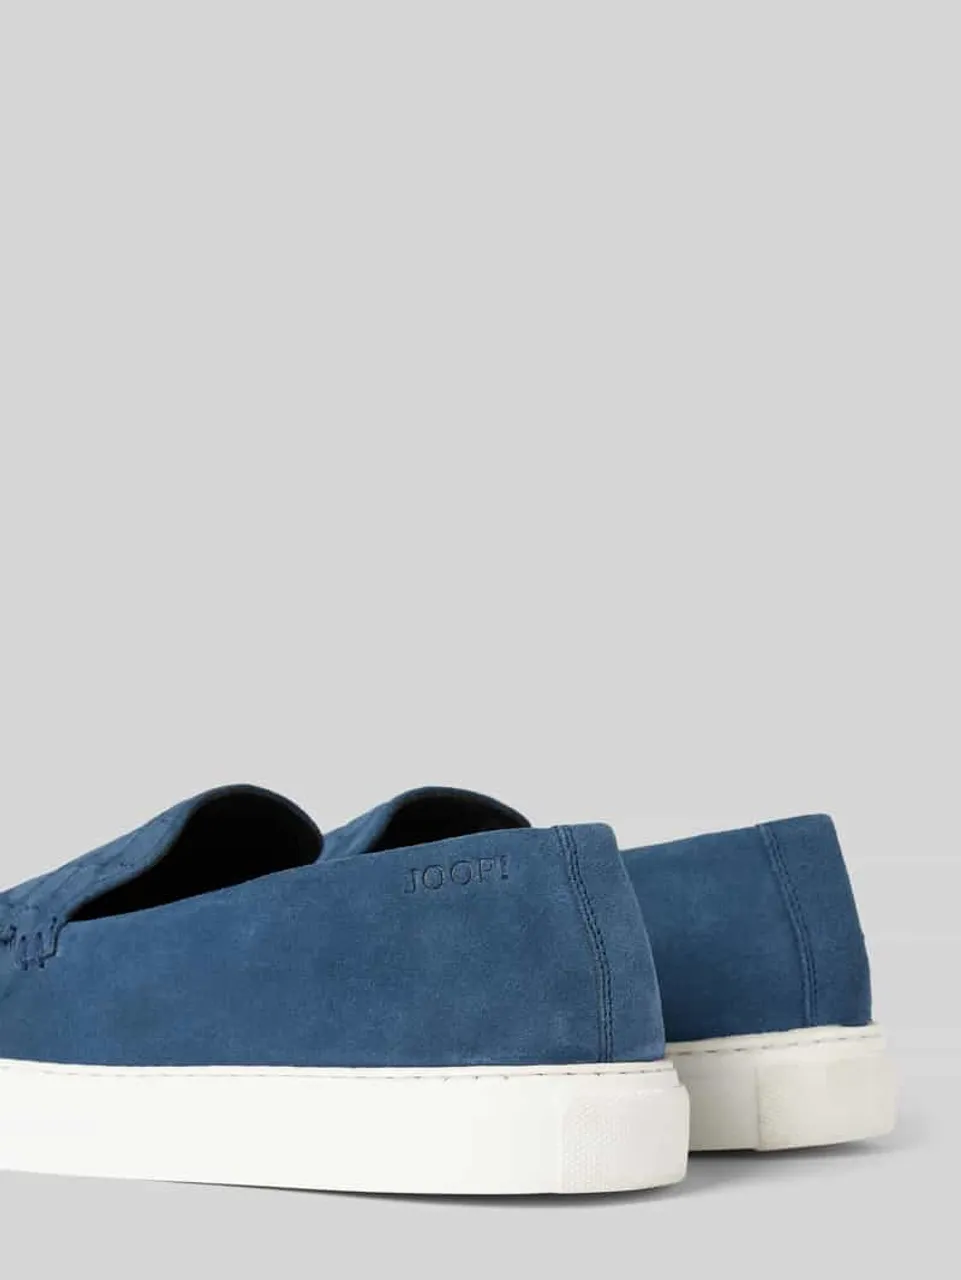 JOOP! SHOES Loafers aus Leder in unifarbenem Design in Blau